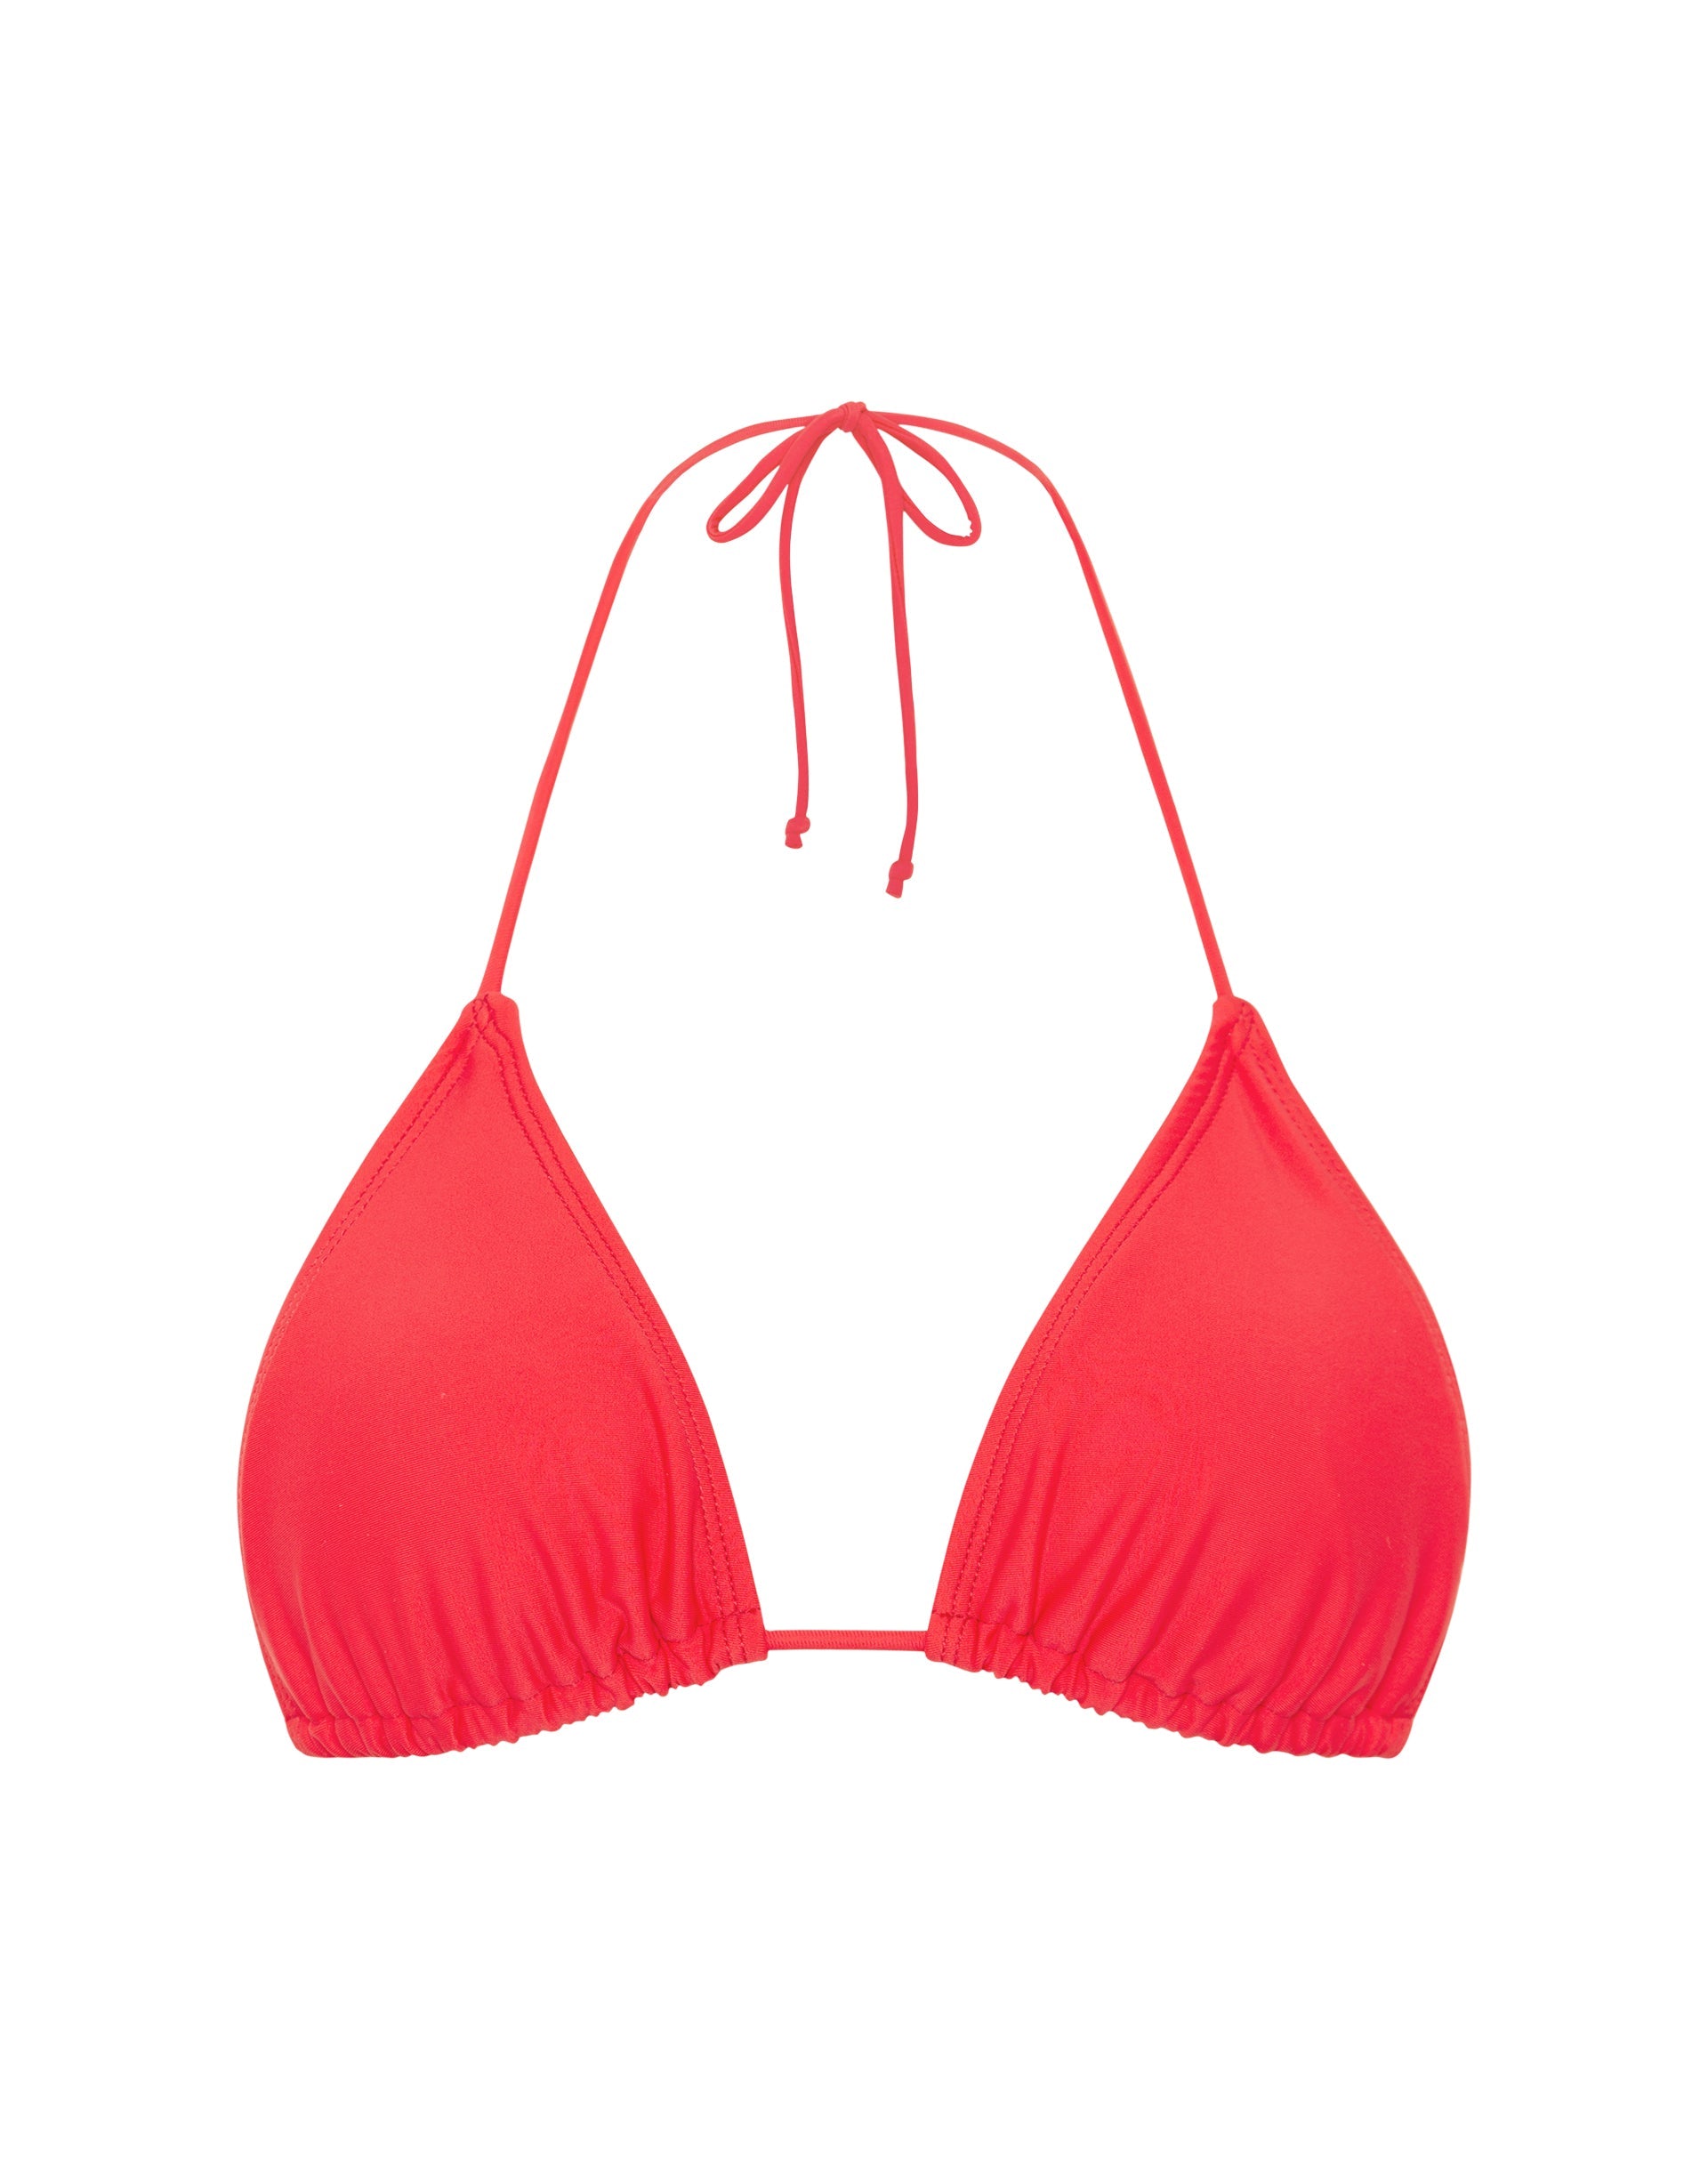 Image of Pami Bikini Top in Scarlet Red